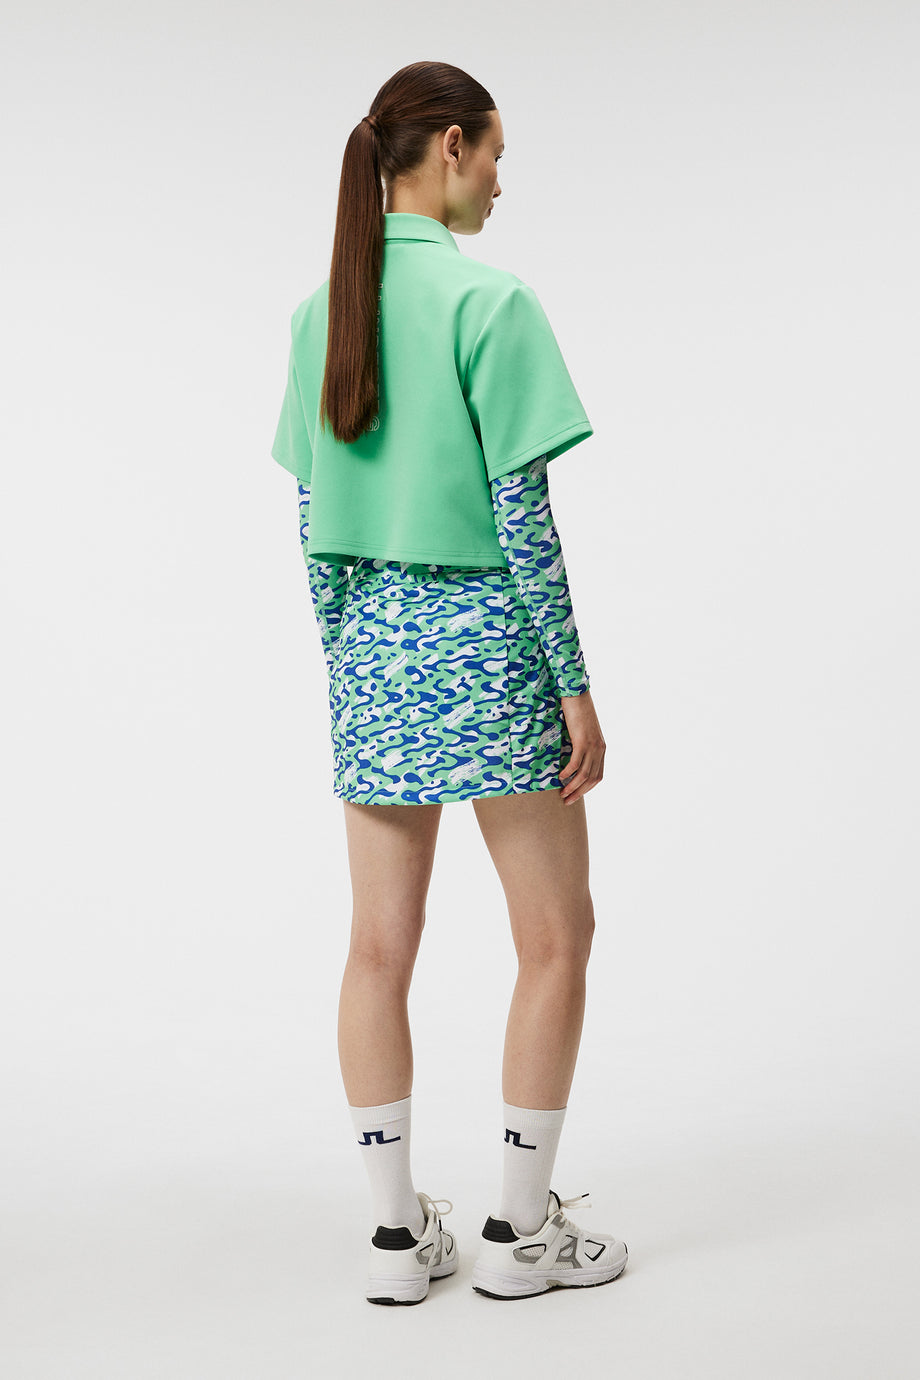 Amelie Print Skirt / Caldera Jade Cream